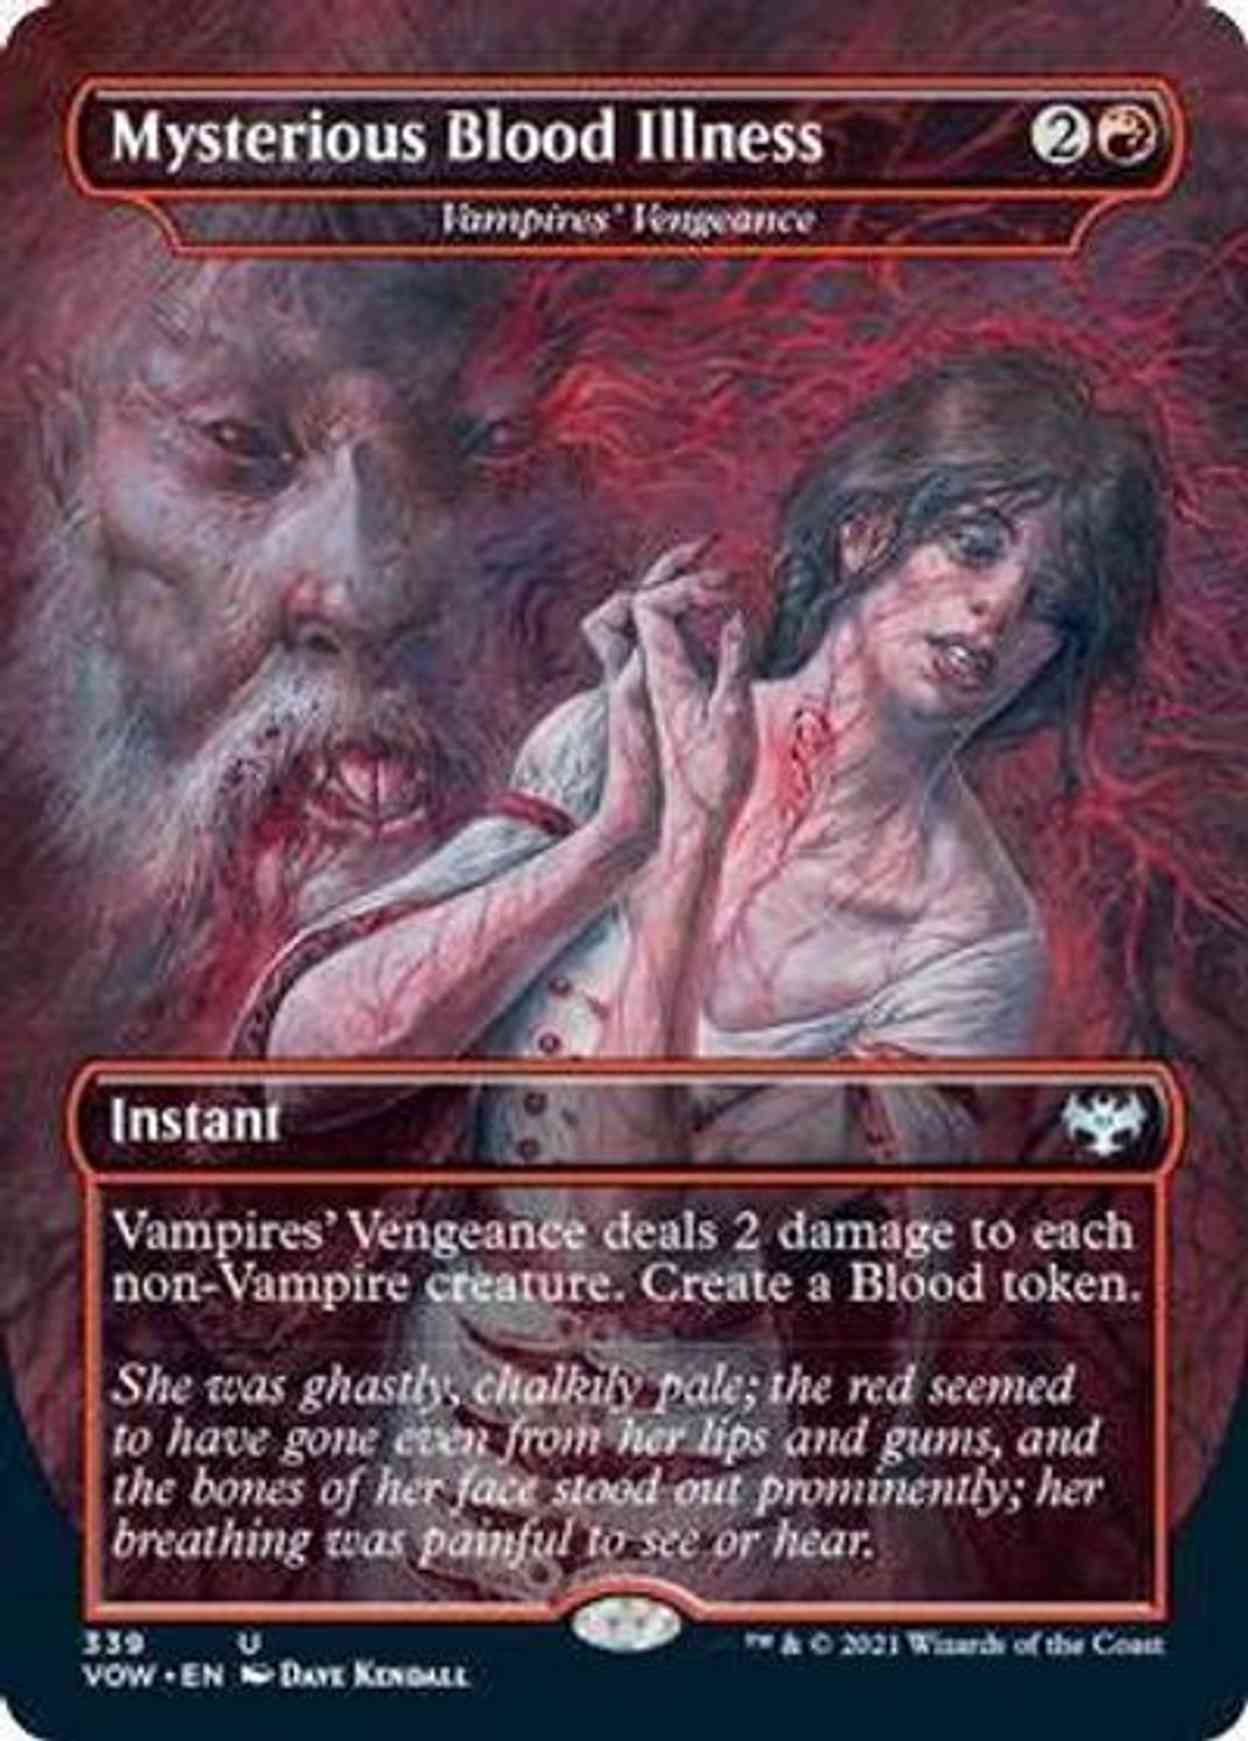 Mysterious Blood Illness - Vampire's Vengeance magic card front